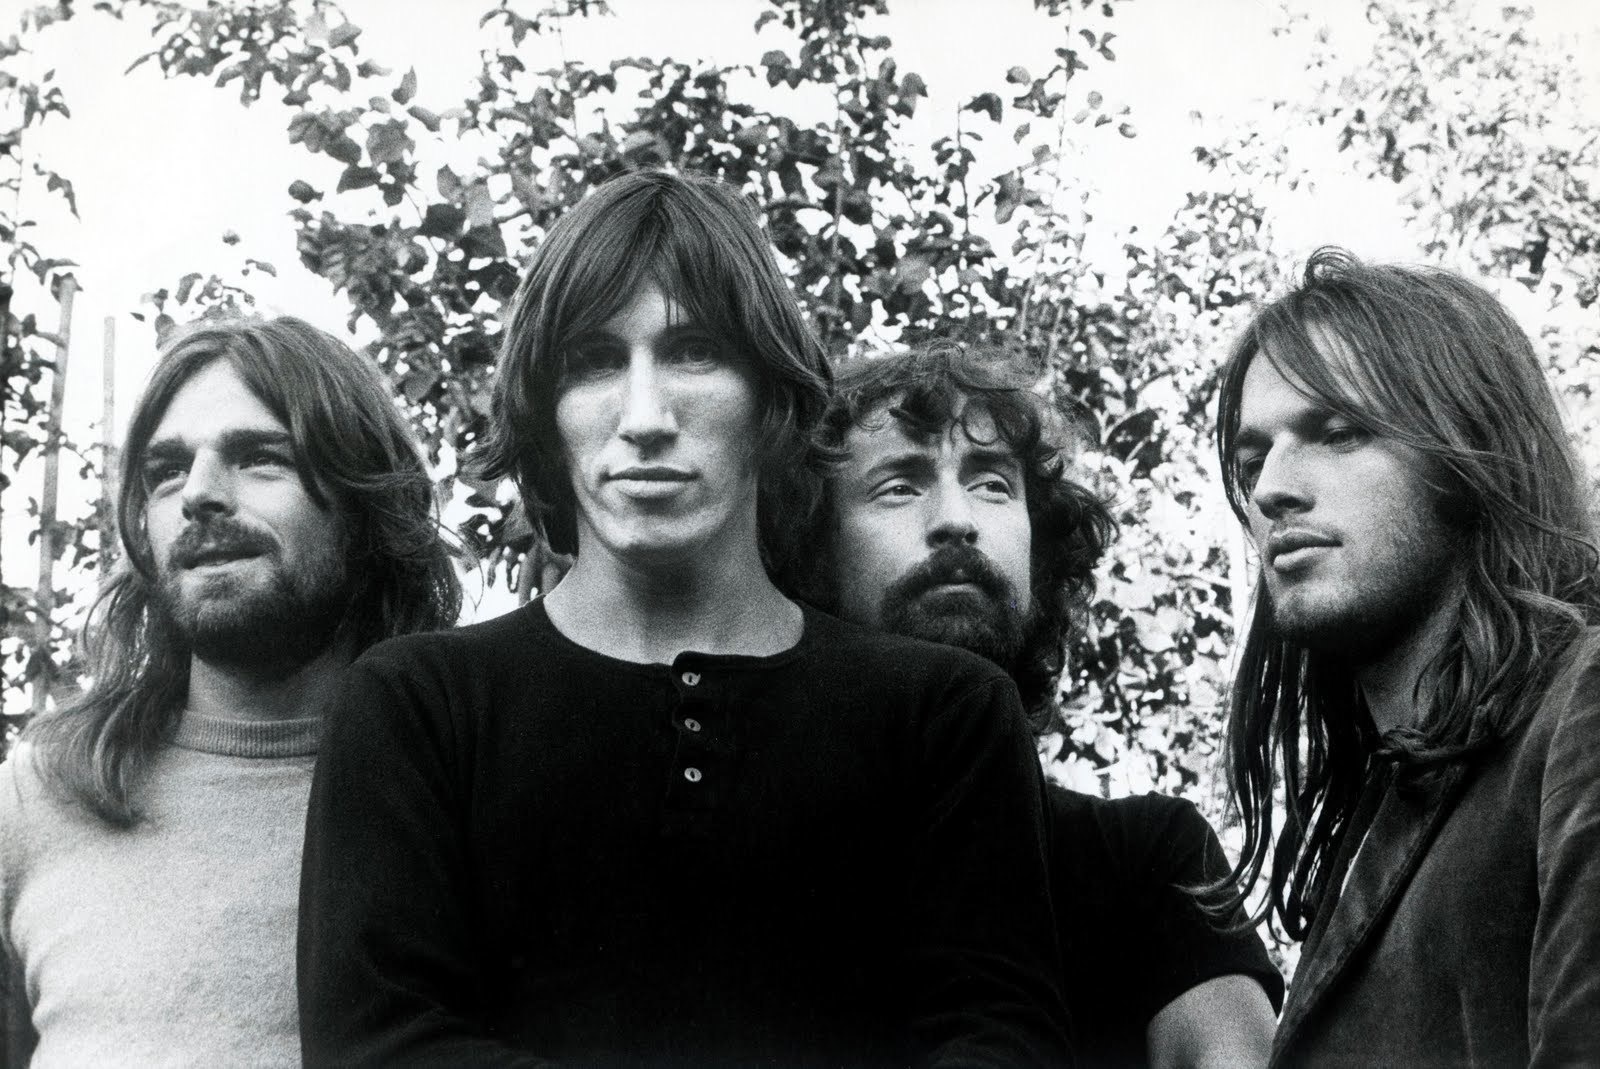 Pink Floyd's original name was Sigma 6.